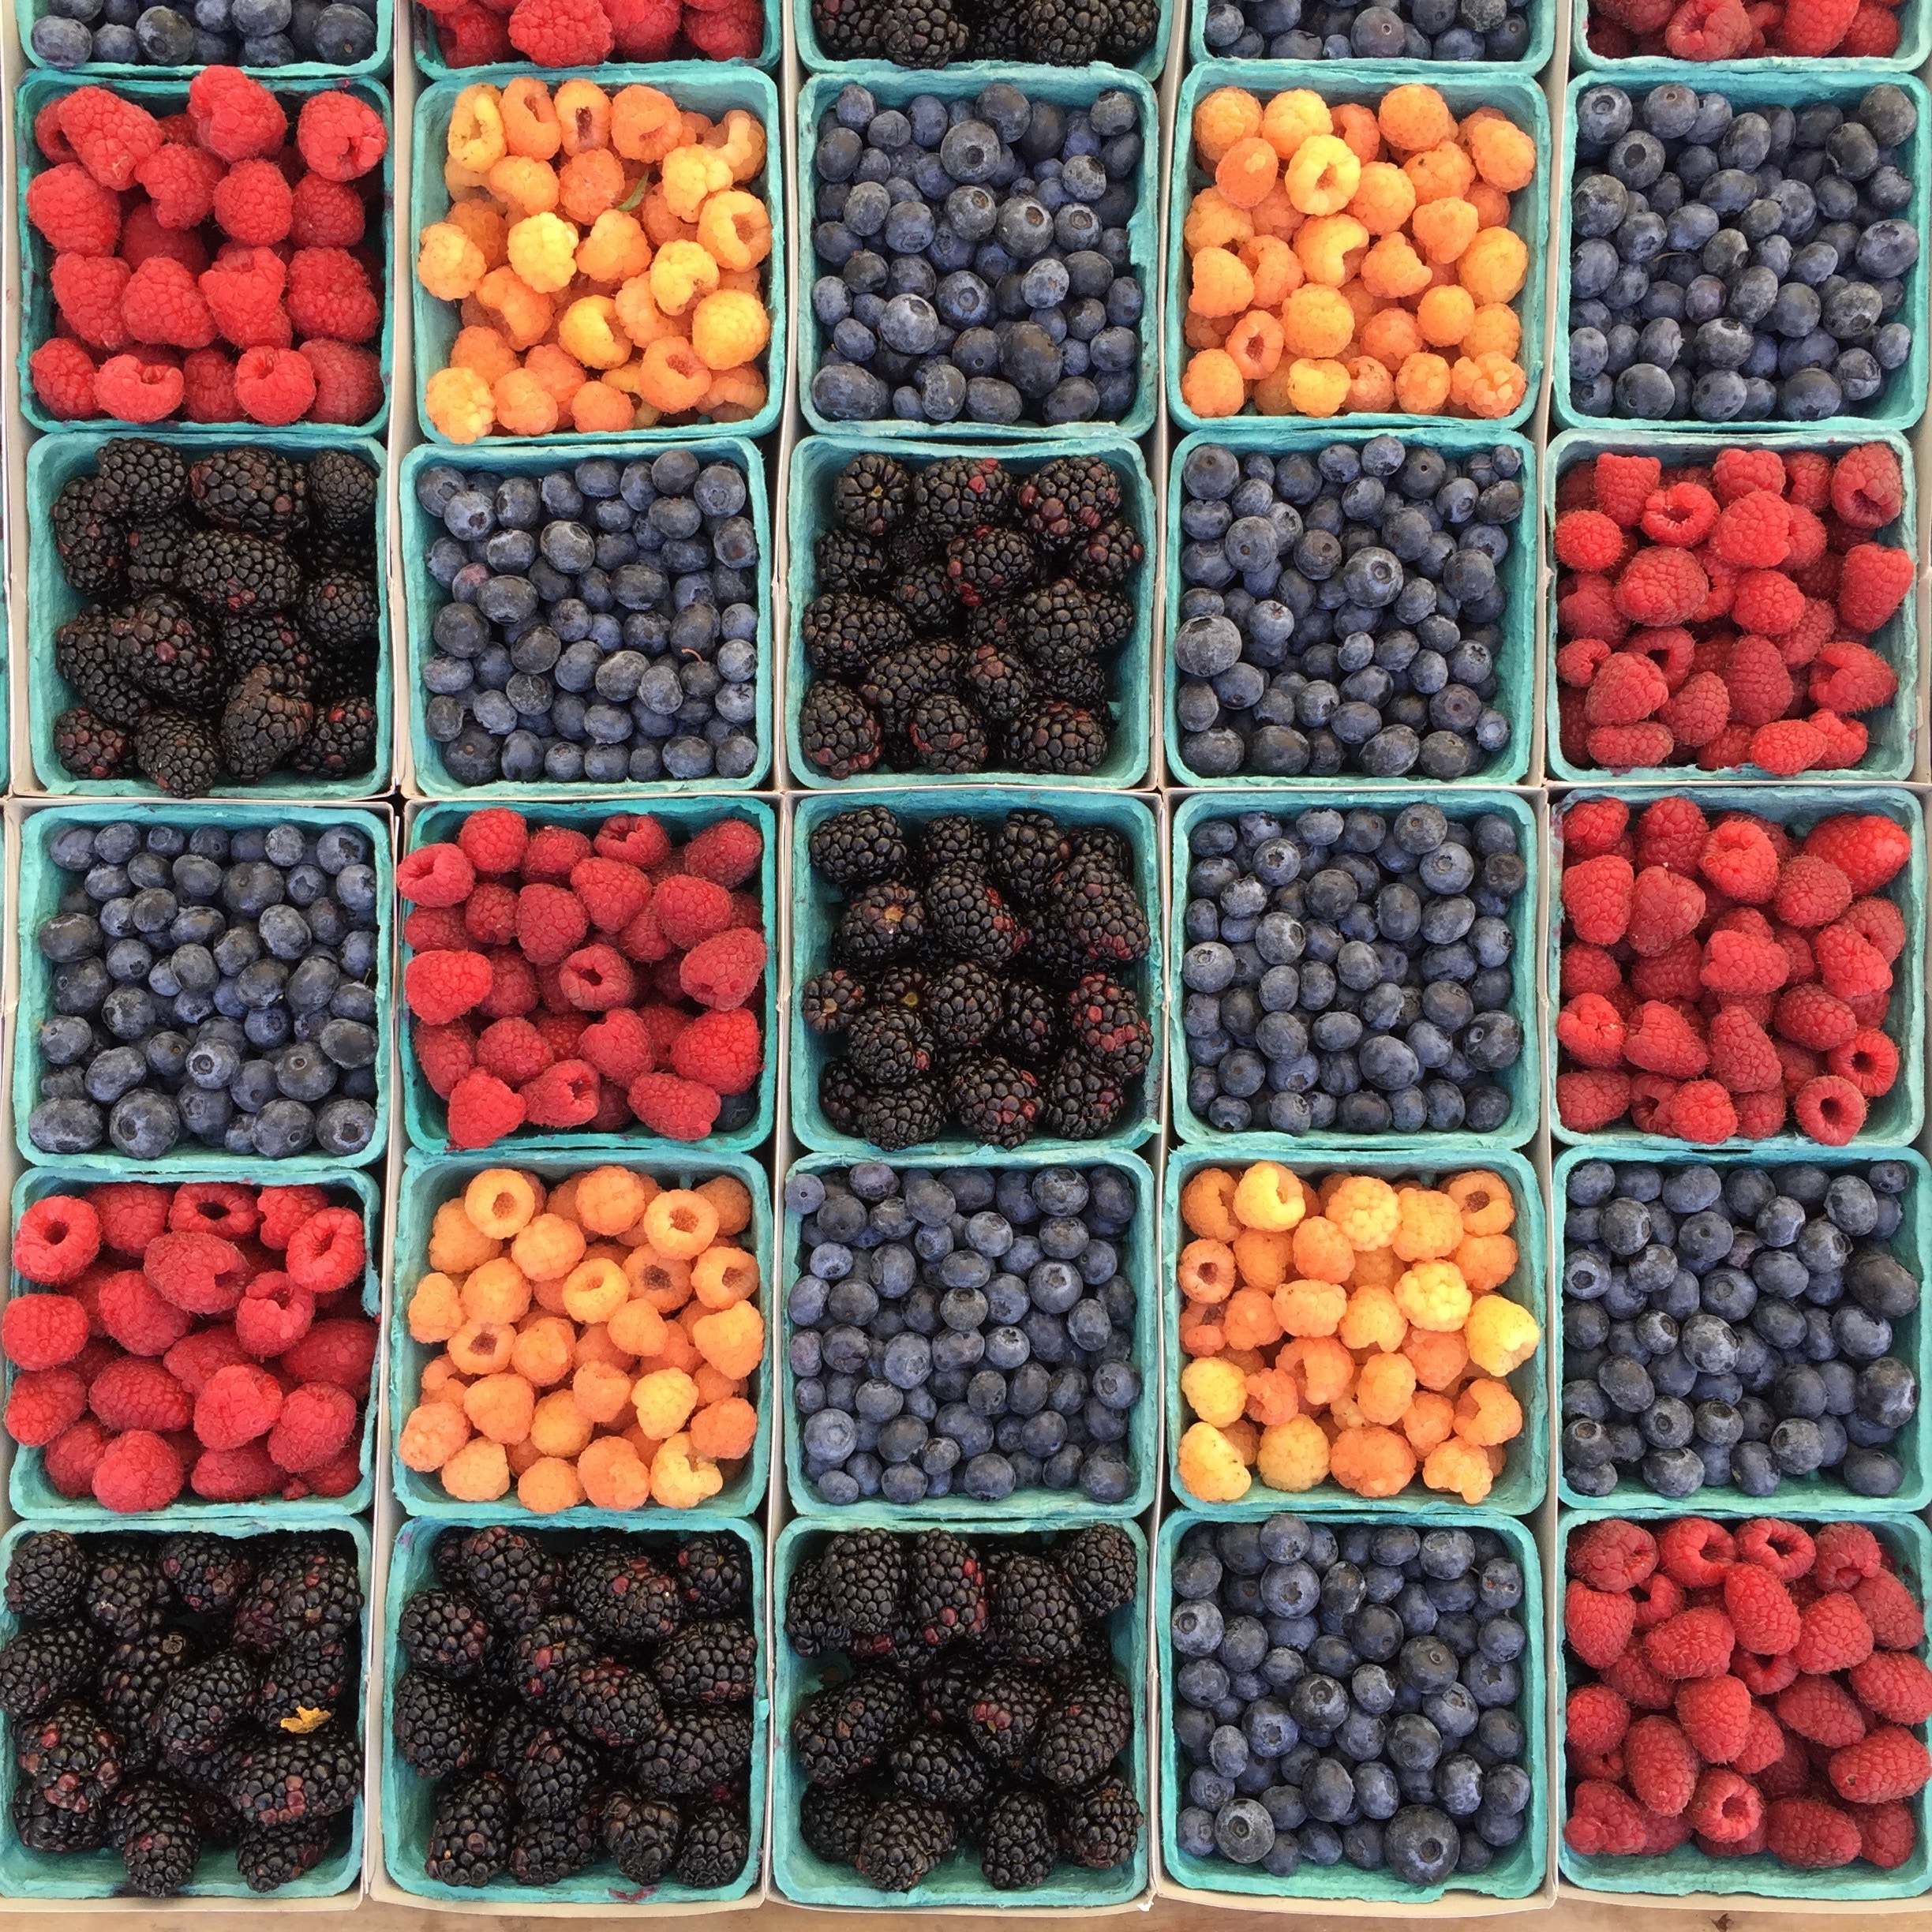 boxes of blueberries, raspberries, blackberries, and some orange ones too